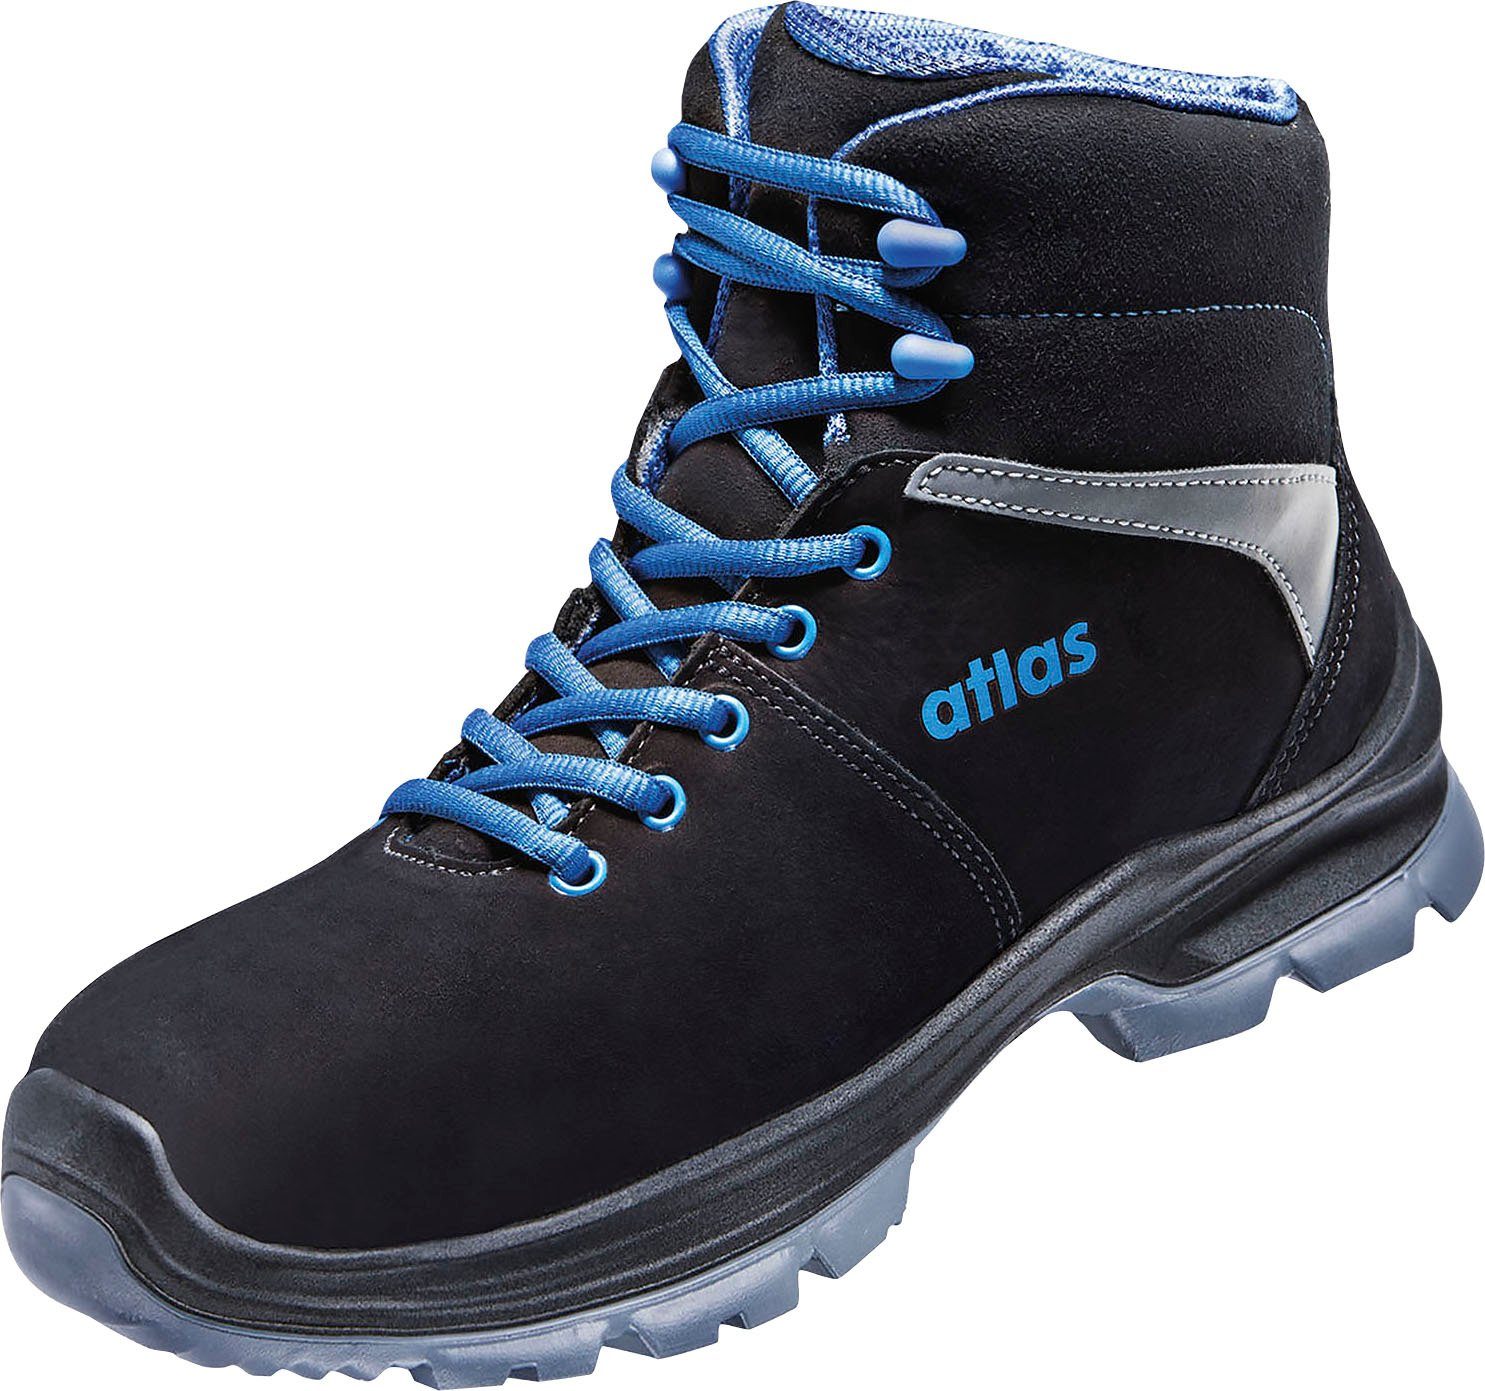 Atlas Schuhe 494 S3 2.0 SL blue ESD XP 805 Sicherheitsschuh EN20345